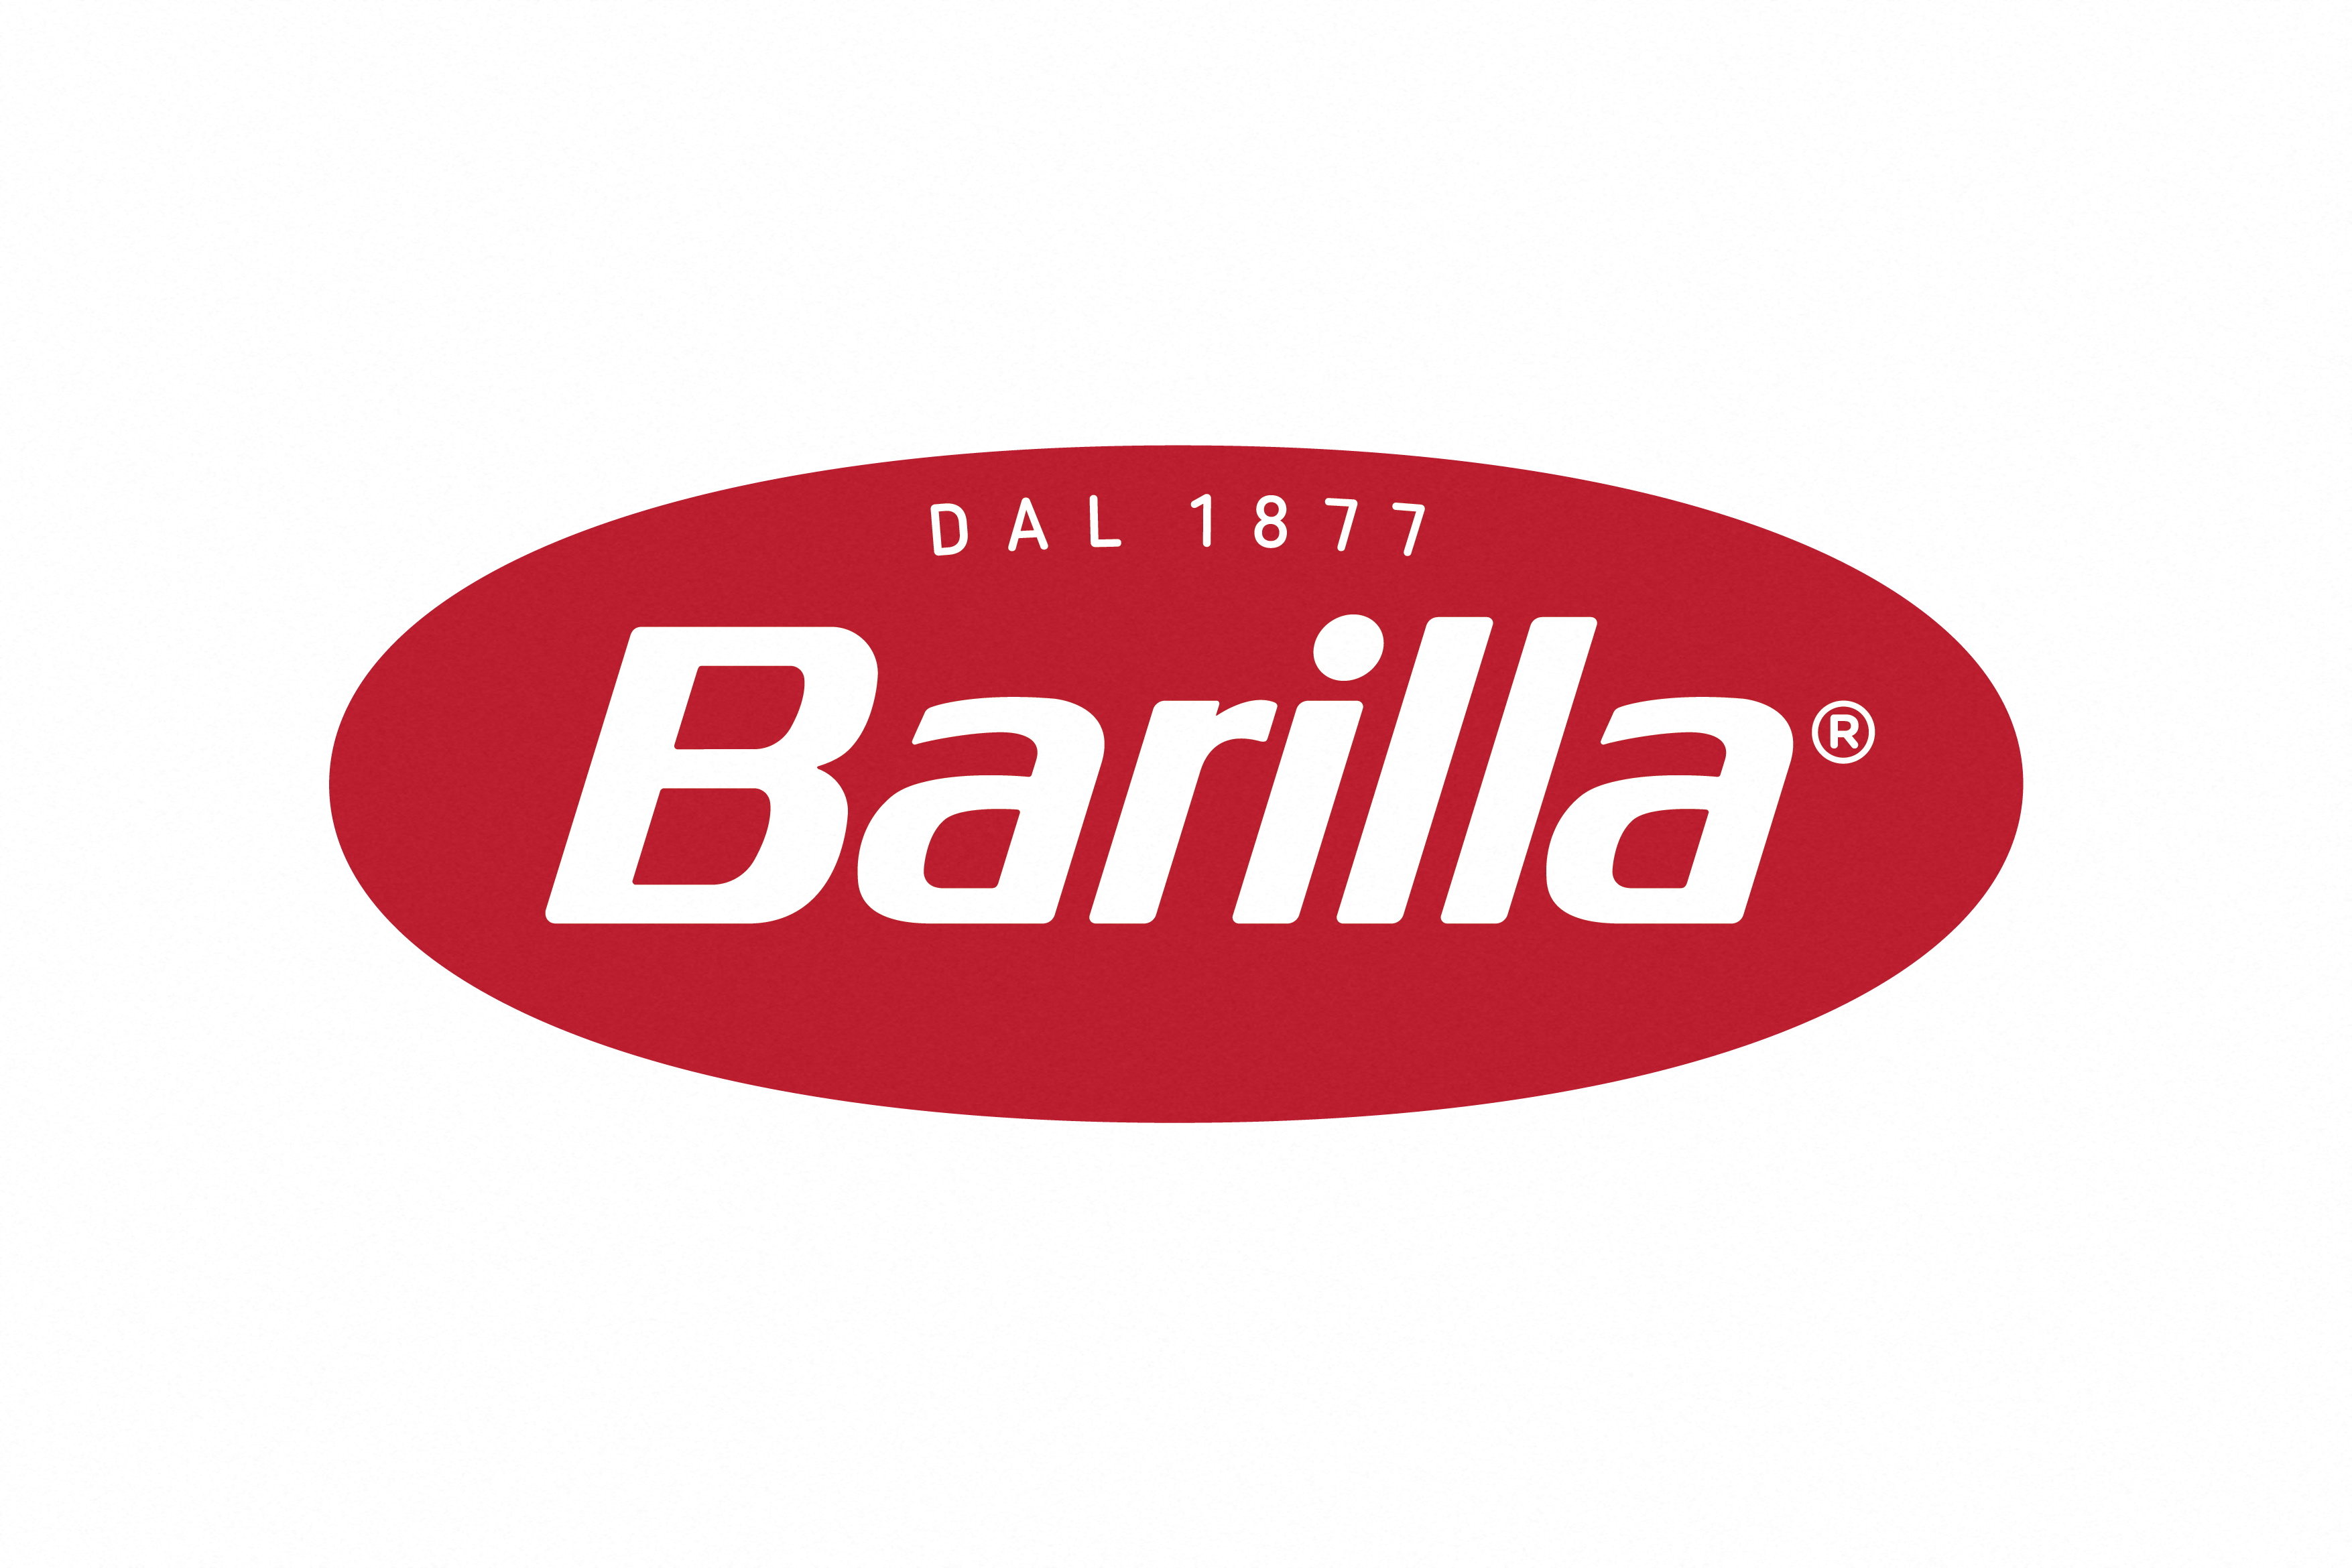 The new logo of world's biggest pasta maker Barilla